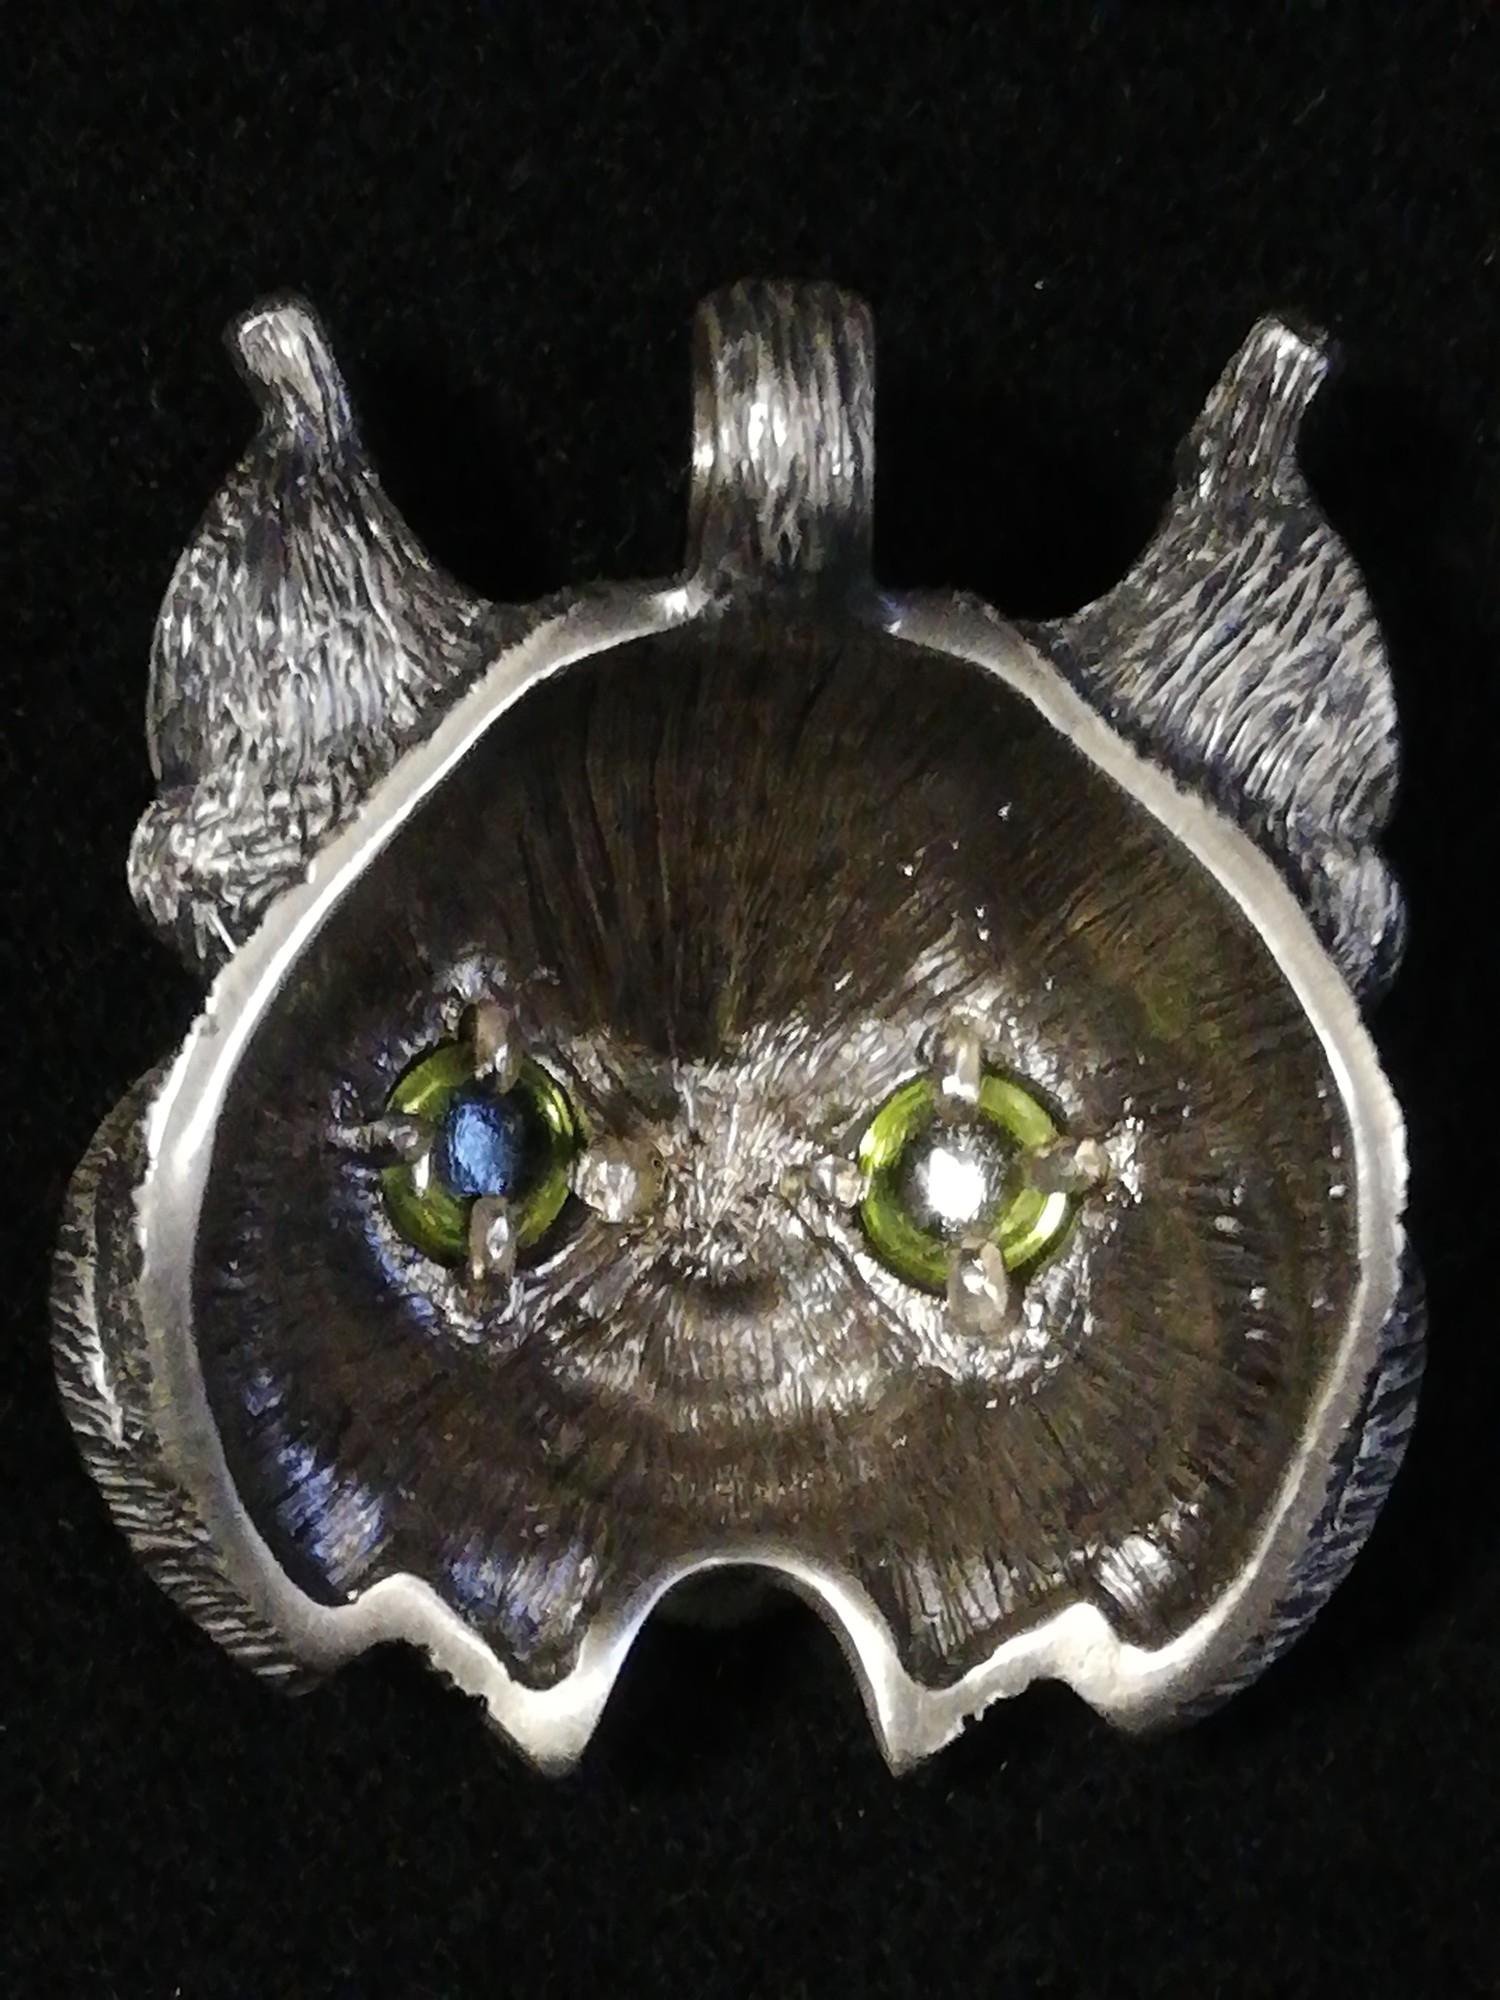 Argent Aqua Jewellery by Adrian Ashley unusual silver lynx pendant set with peridot eyes - Image 2 of 2